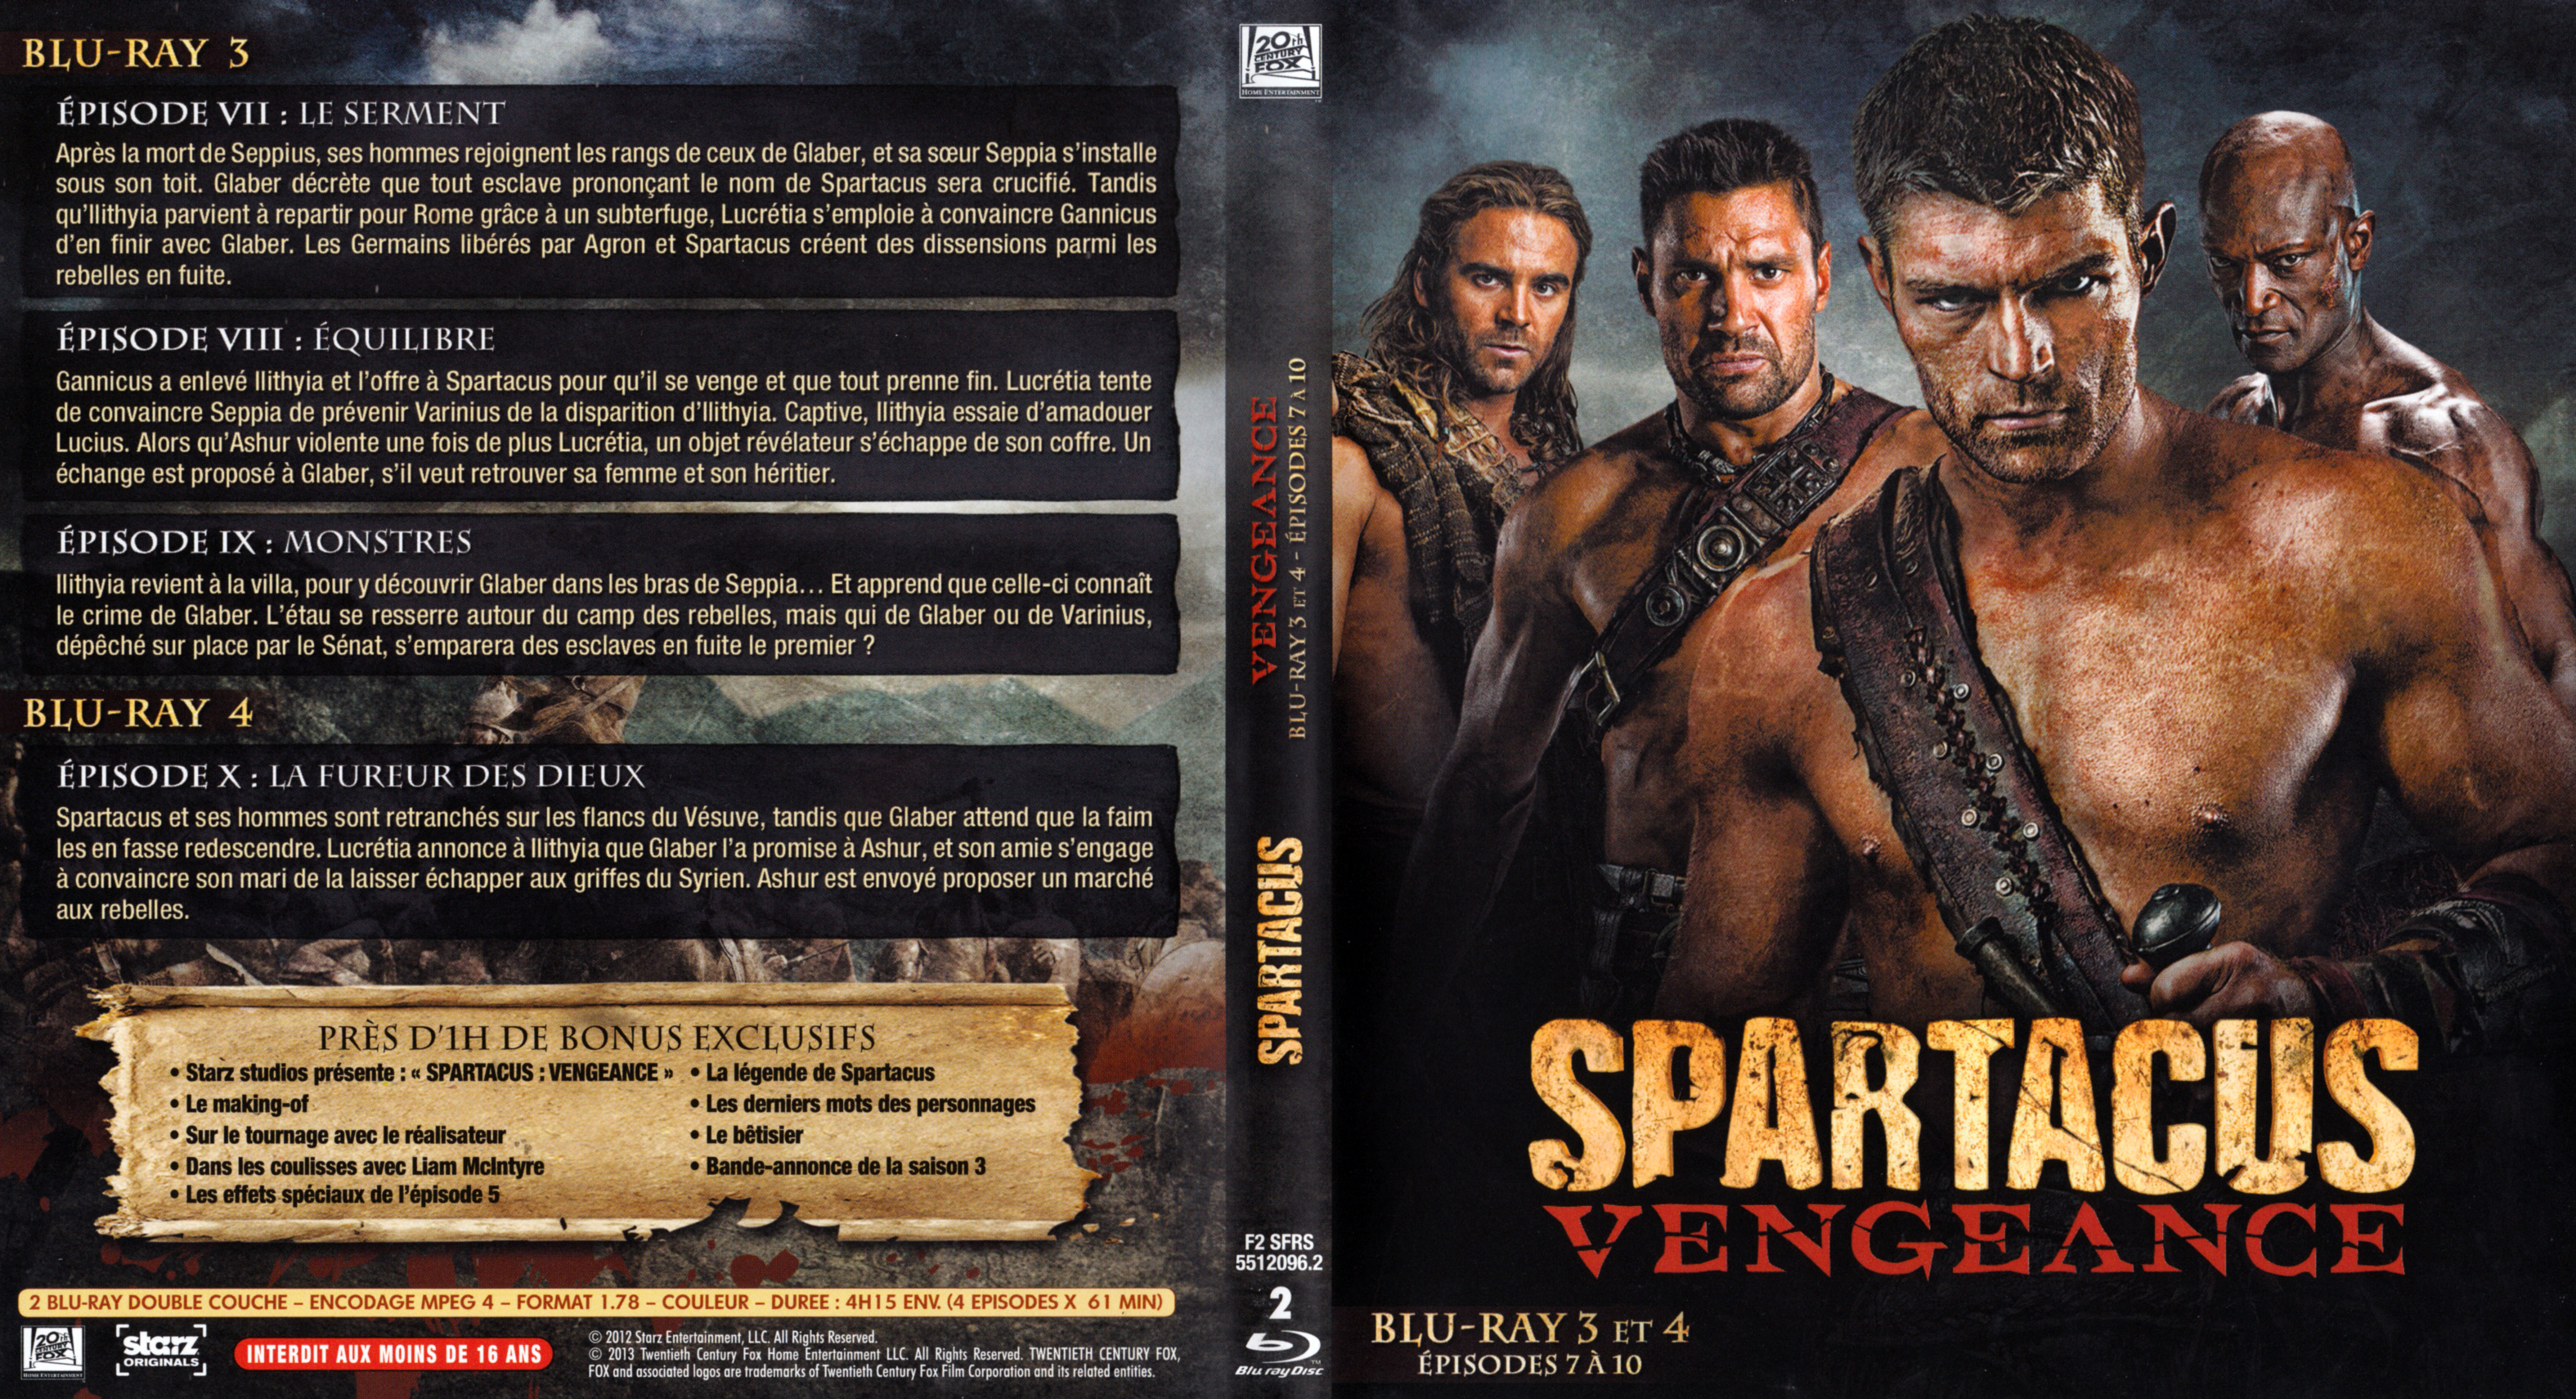 Jaquette DVD Spartacus vengeance Saison 2 DVD 2 (BLU-RAY)